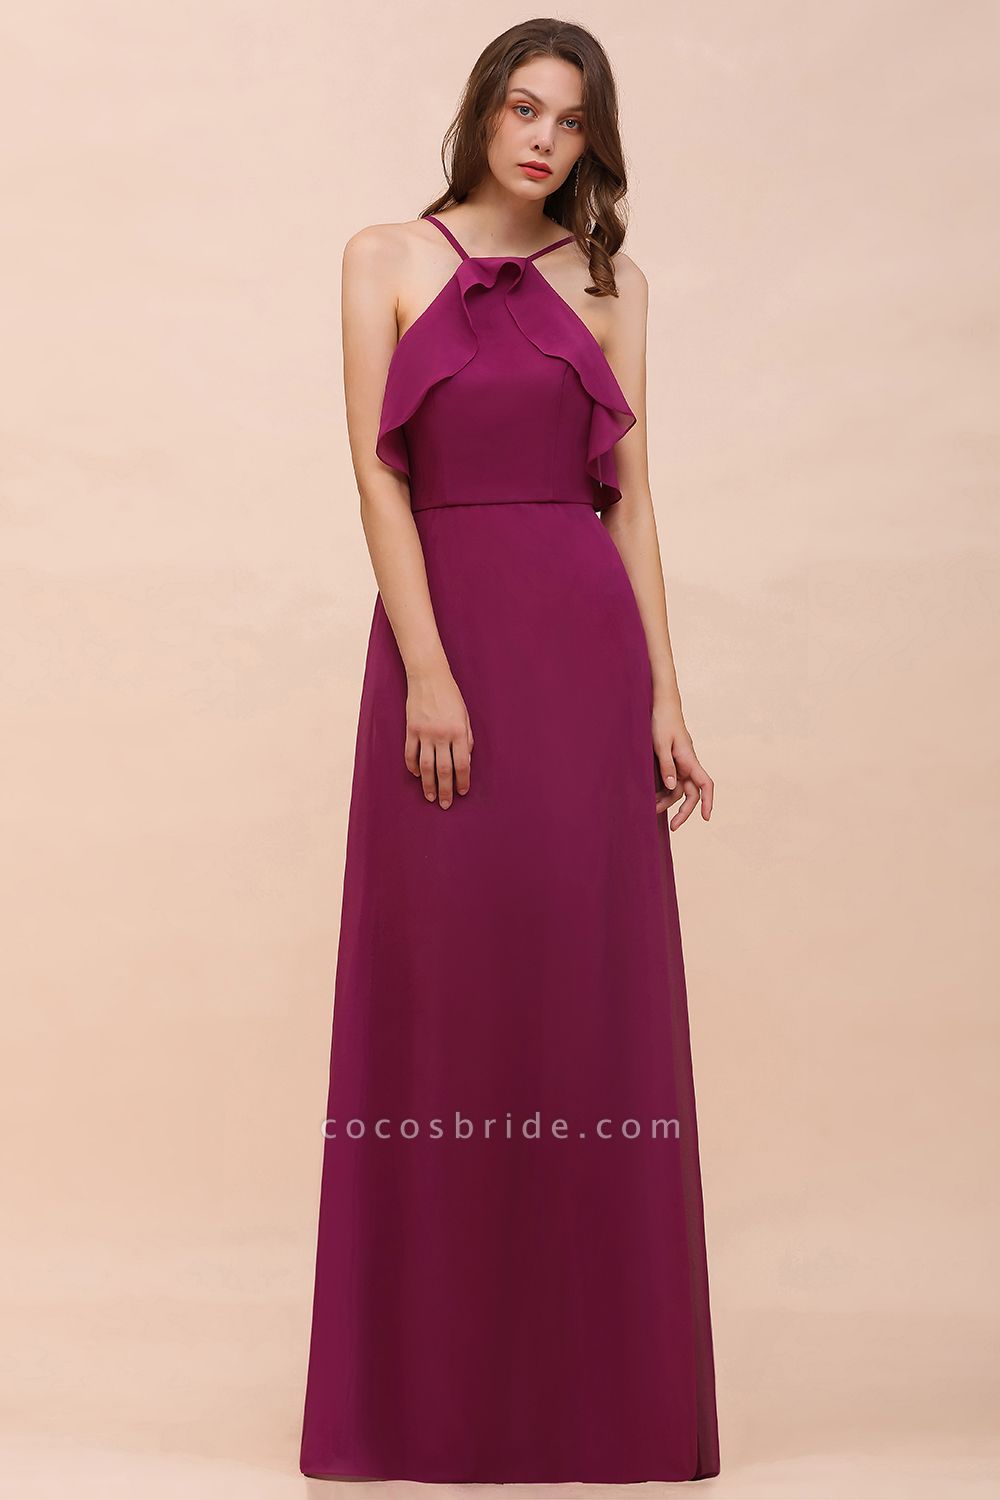 Stylish Long A-line Chiffon Halter Mulberry Bridesmaid Dress with Pockets